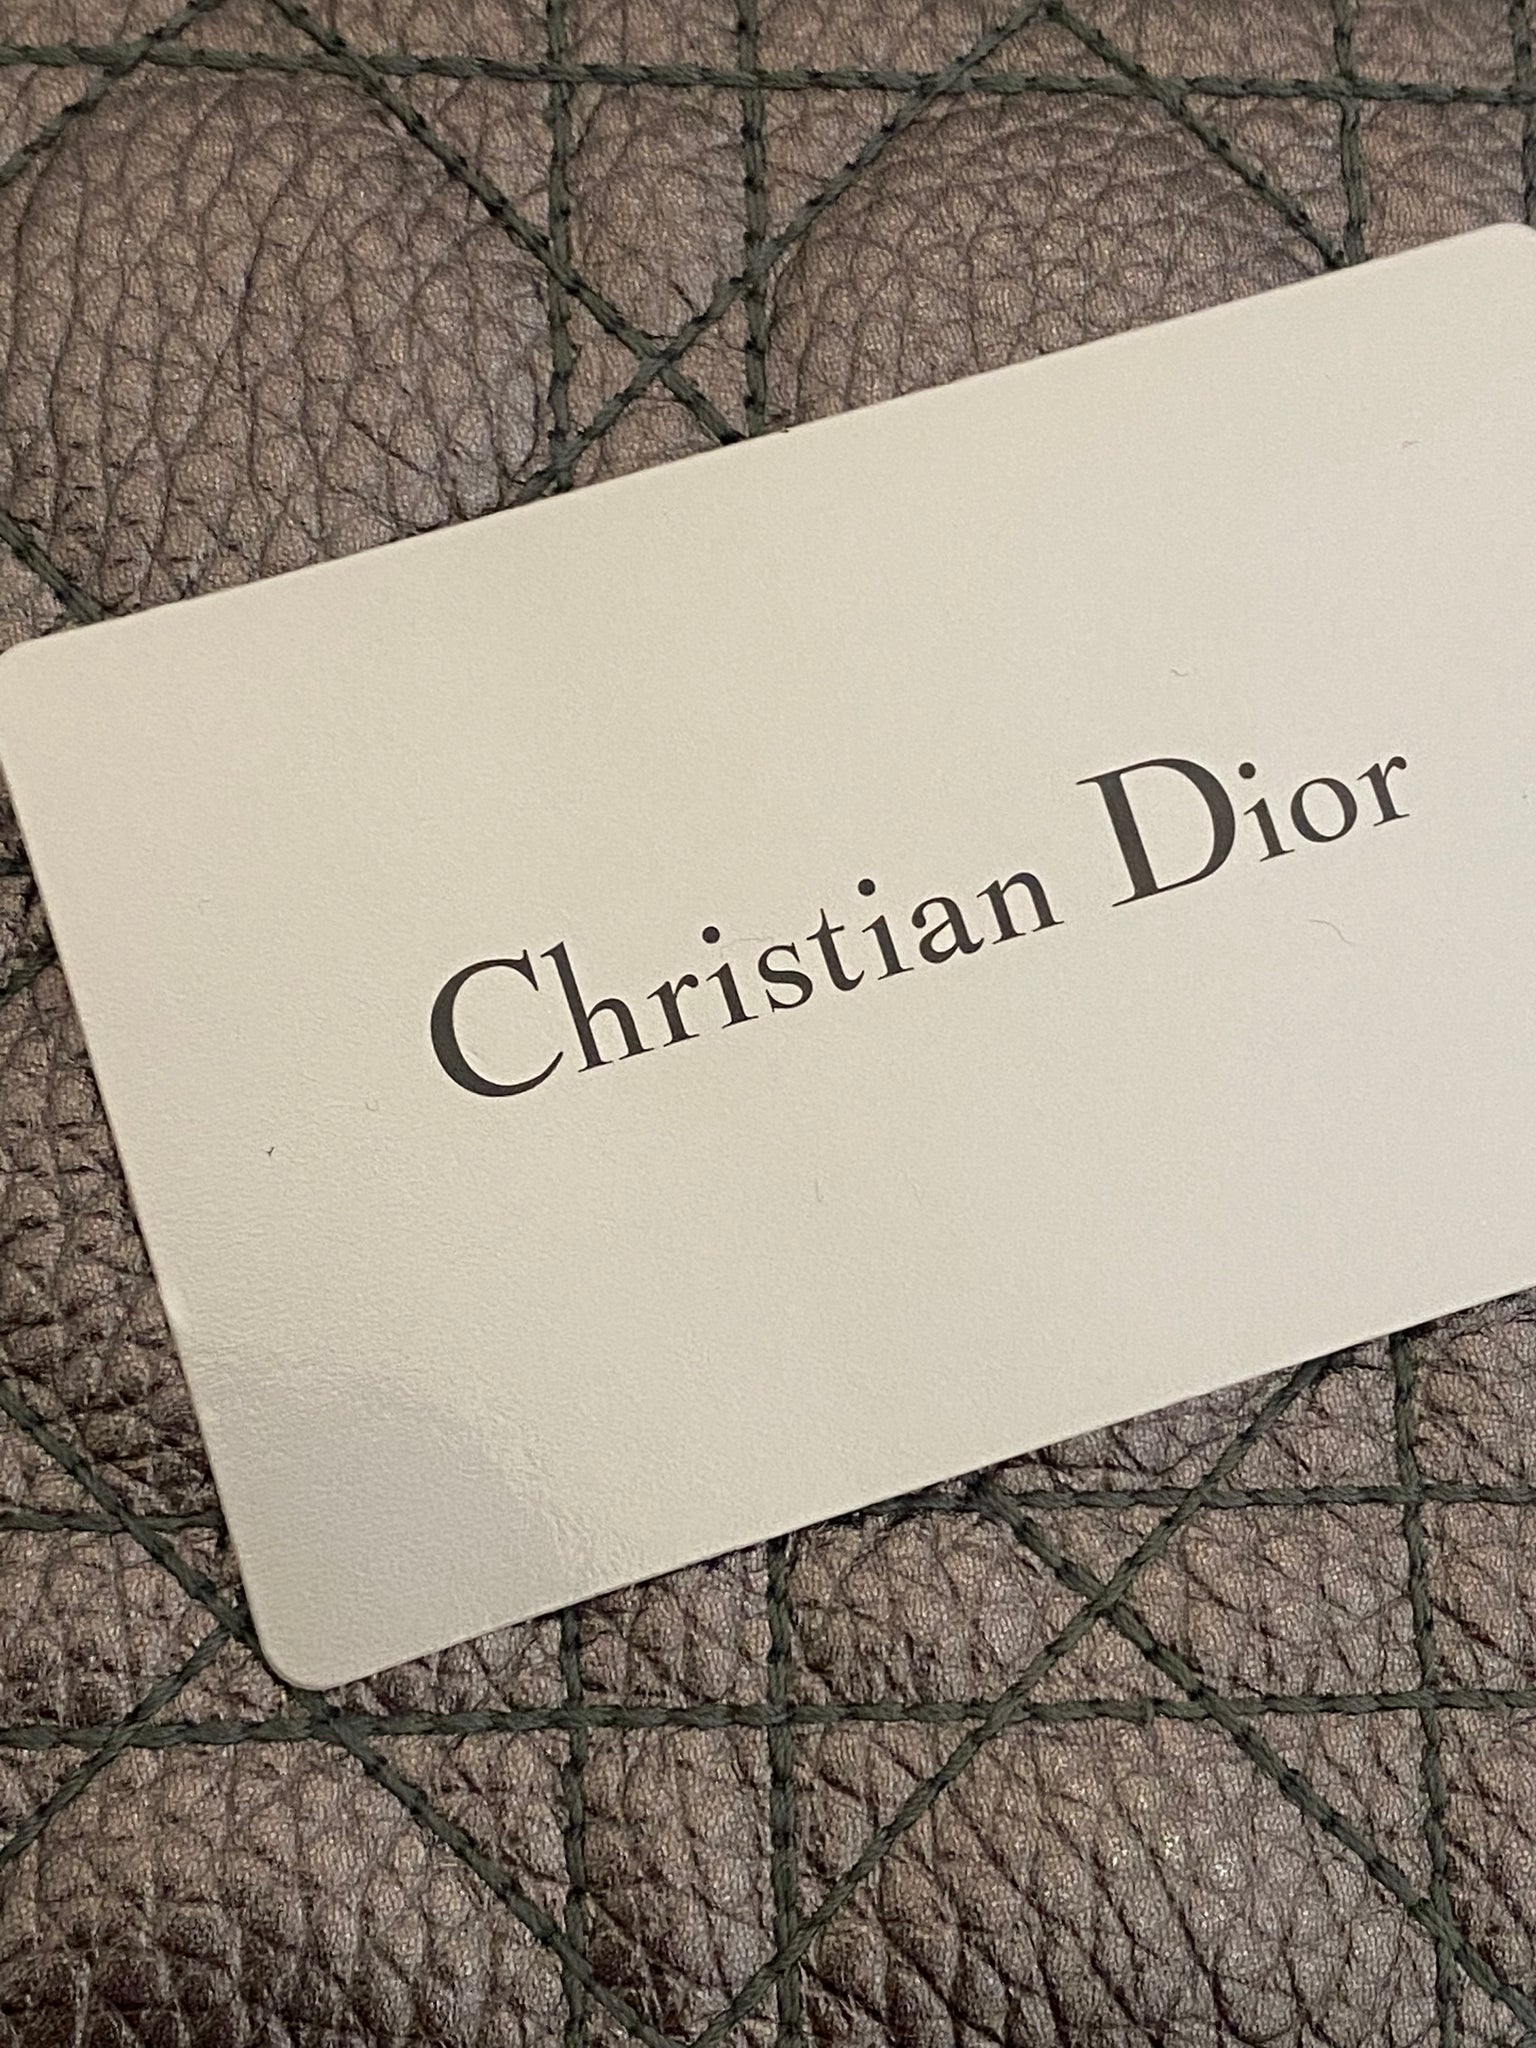 Lady Dior Crossbody Wallet